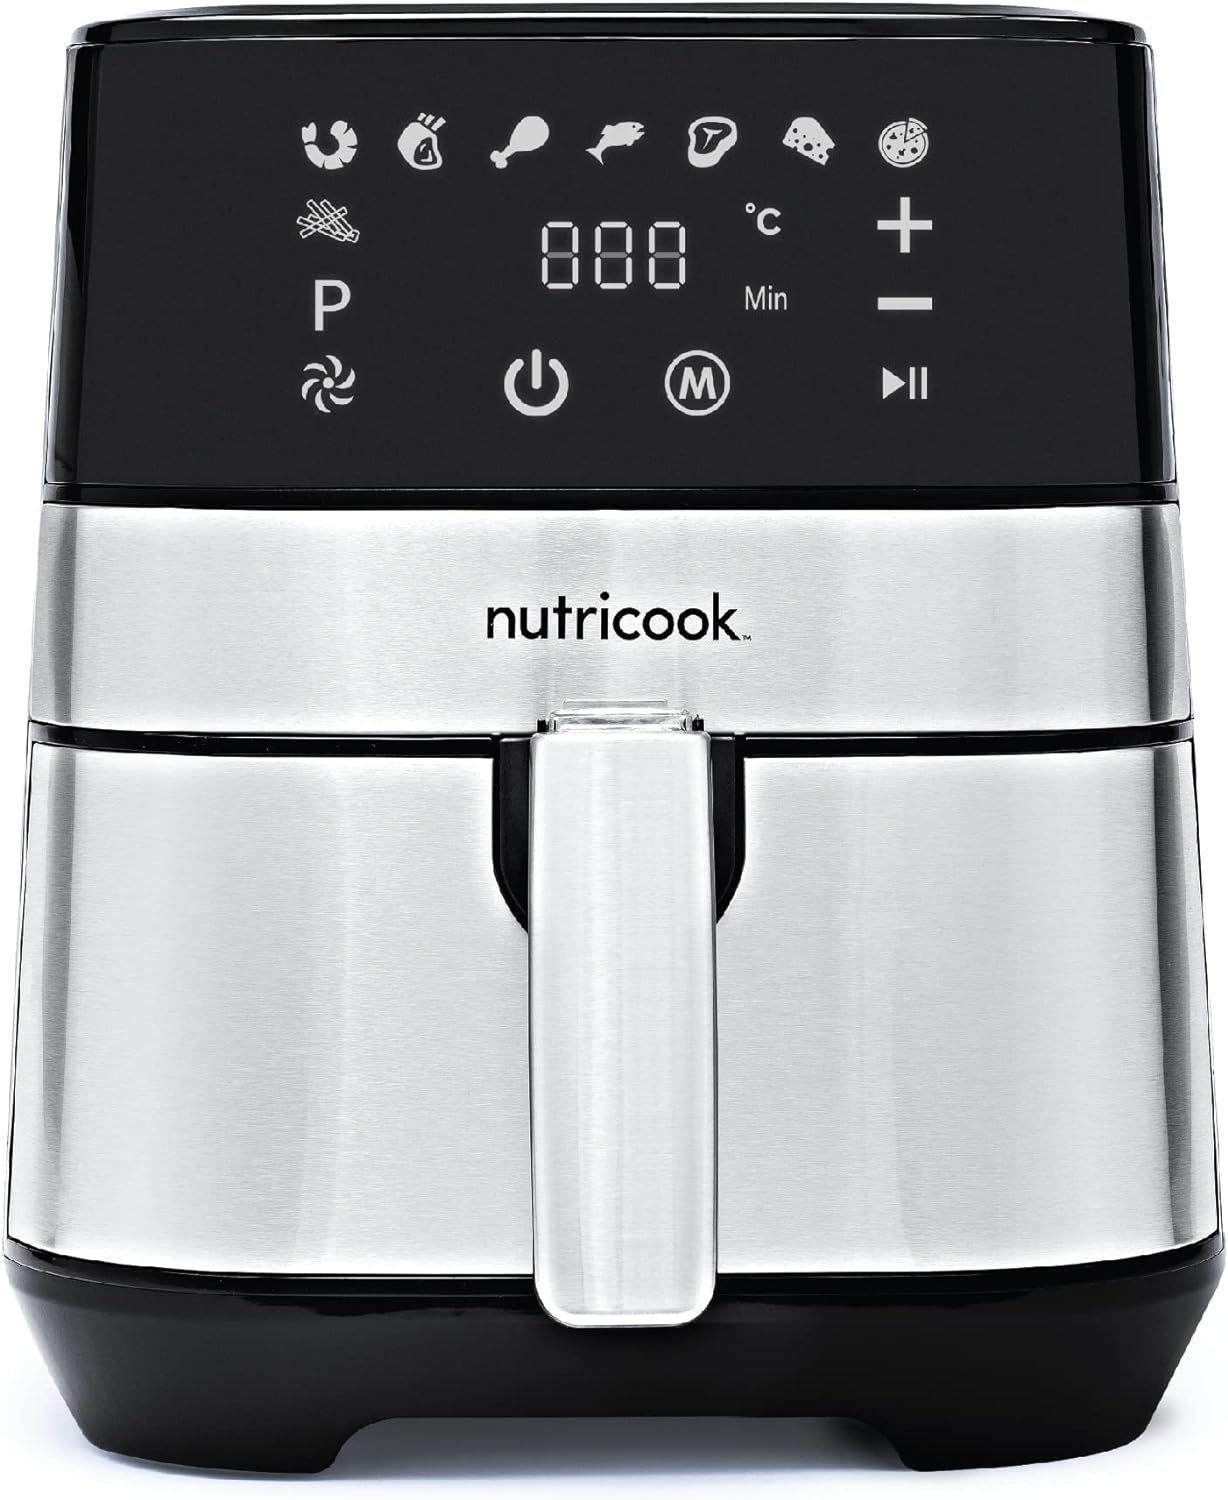 Nutricook Rapid Airfryer 2 / 5.5L / Digital Control Panel Display - Silver